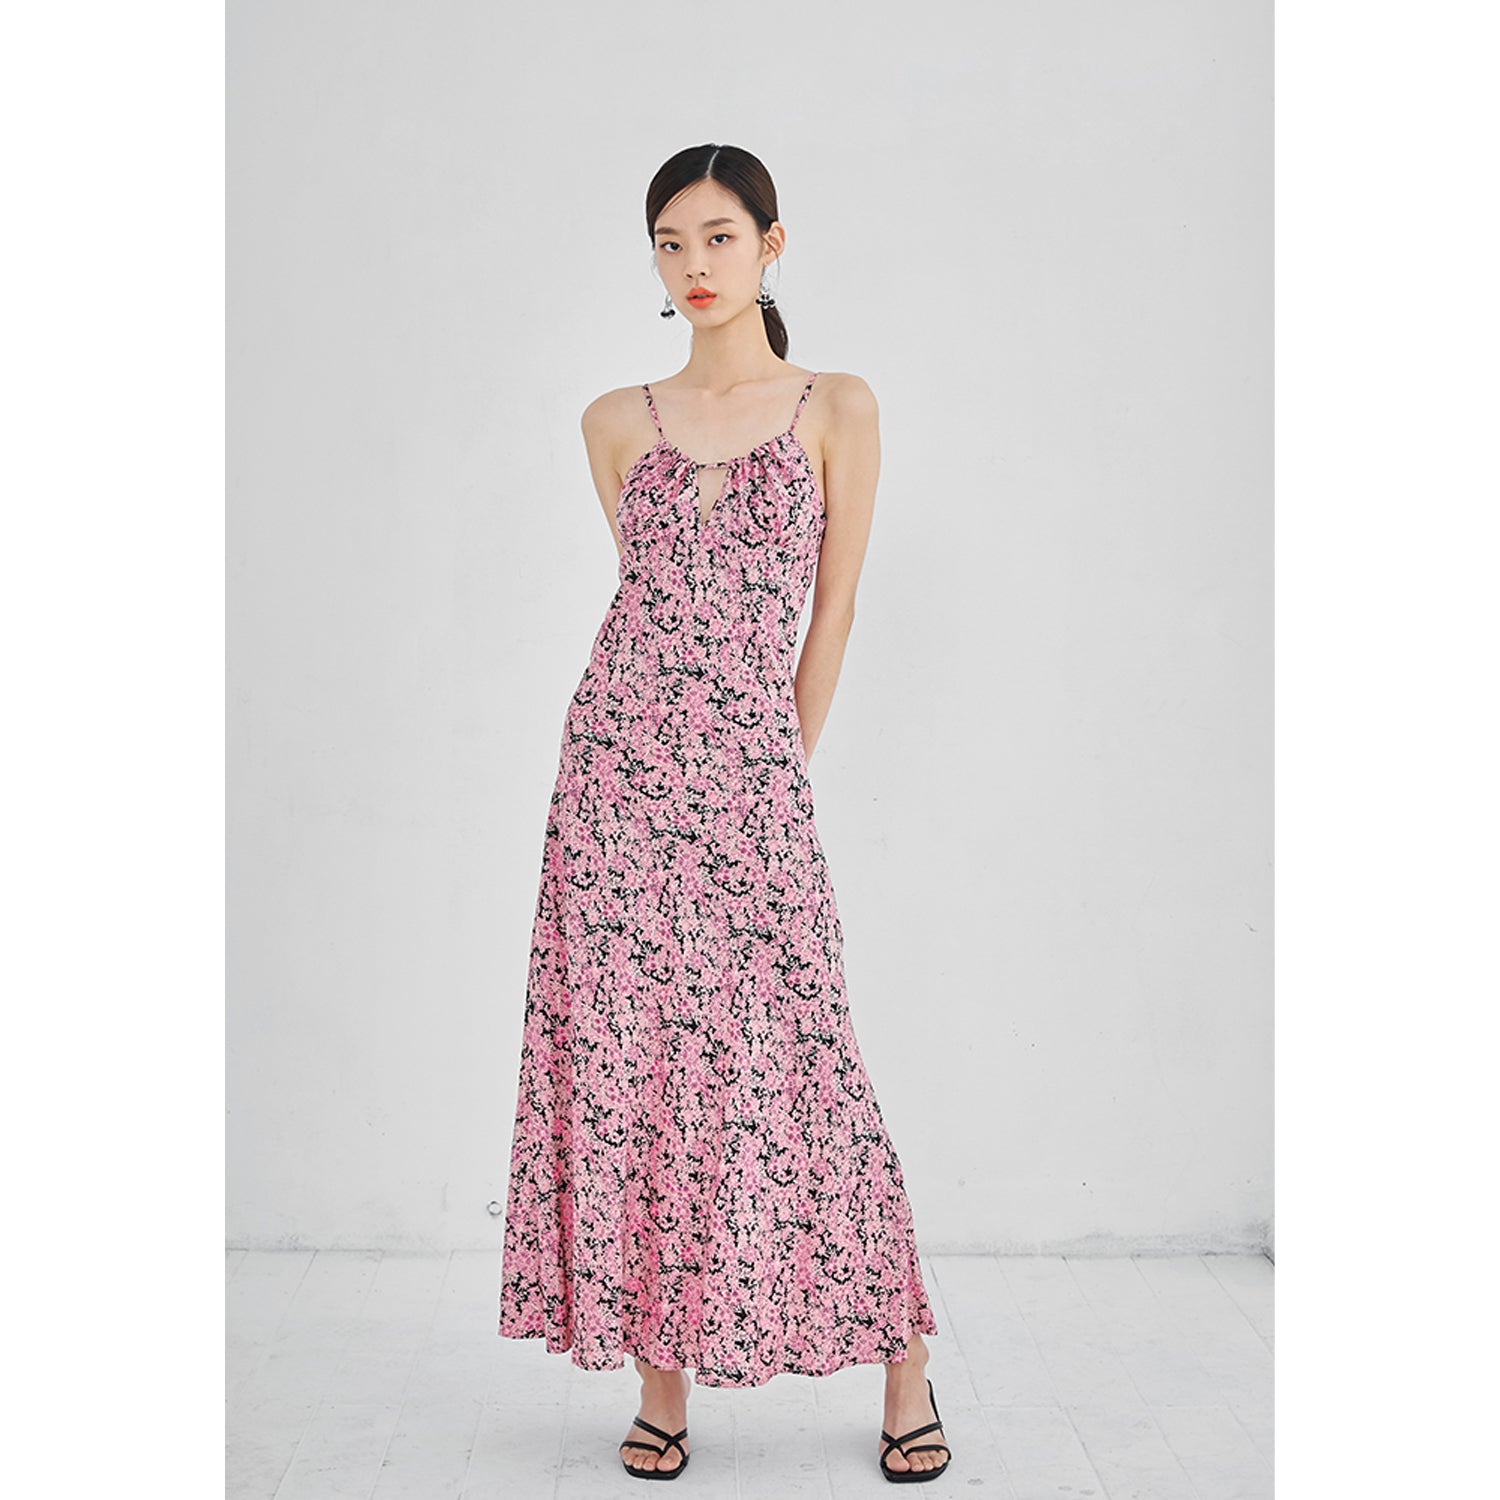 Blush floral maxi dress